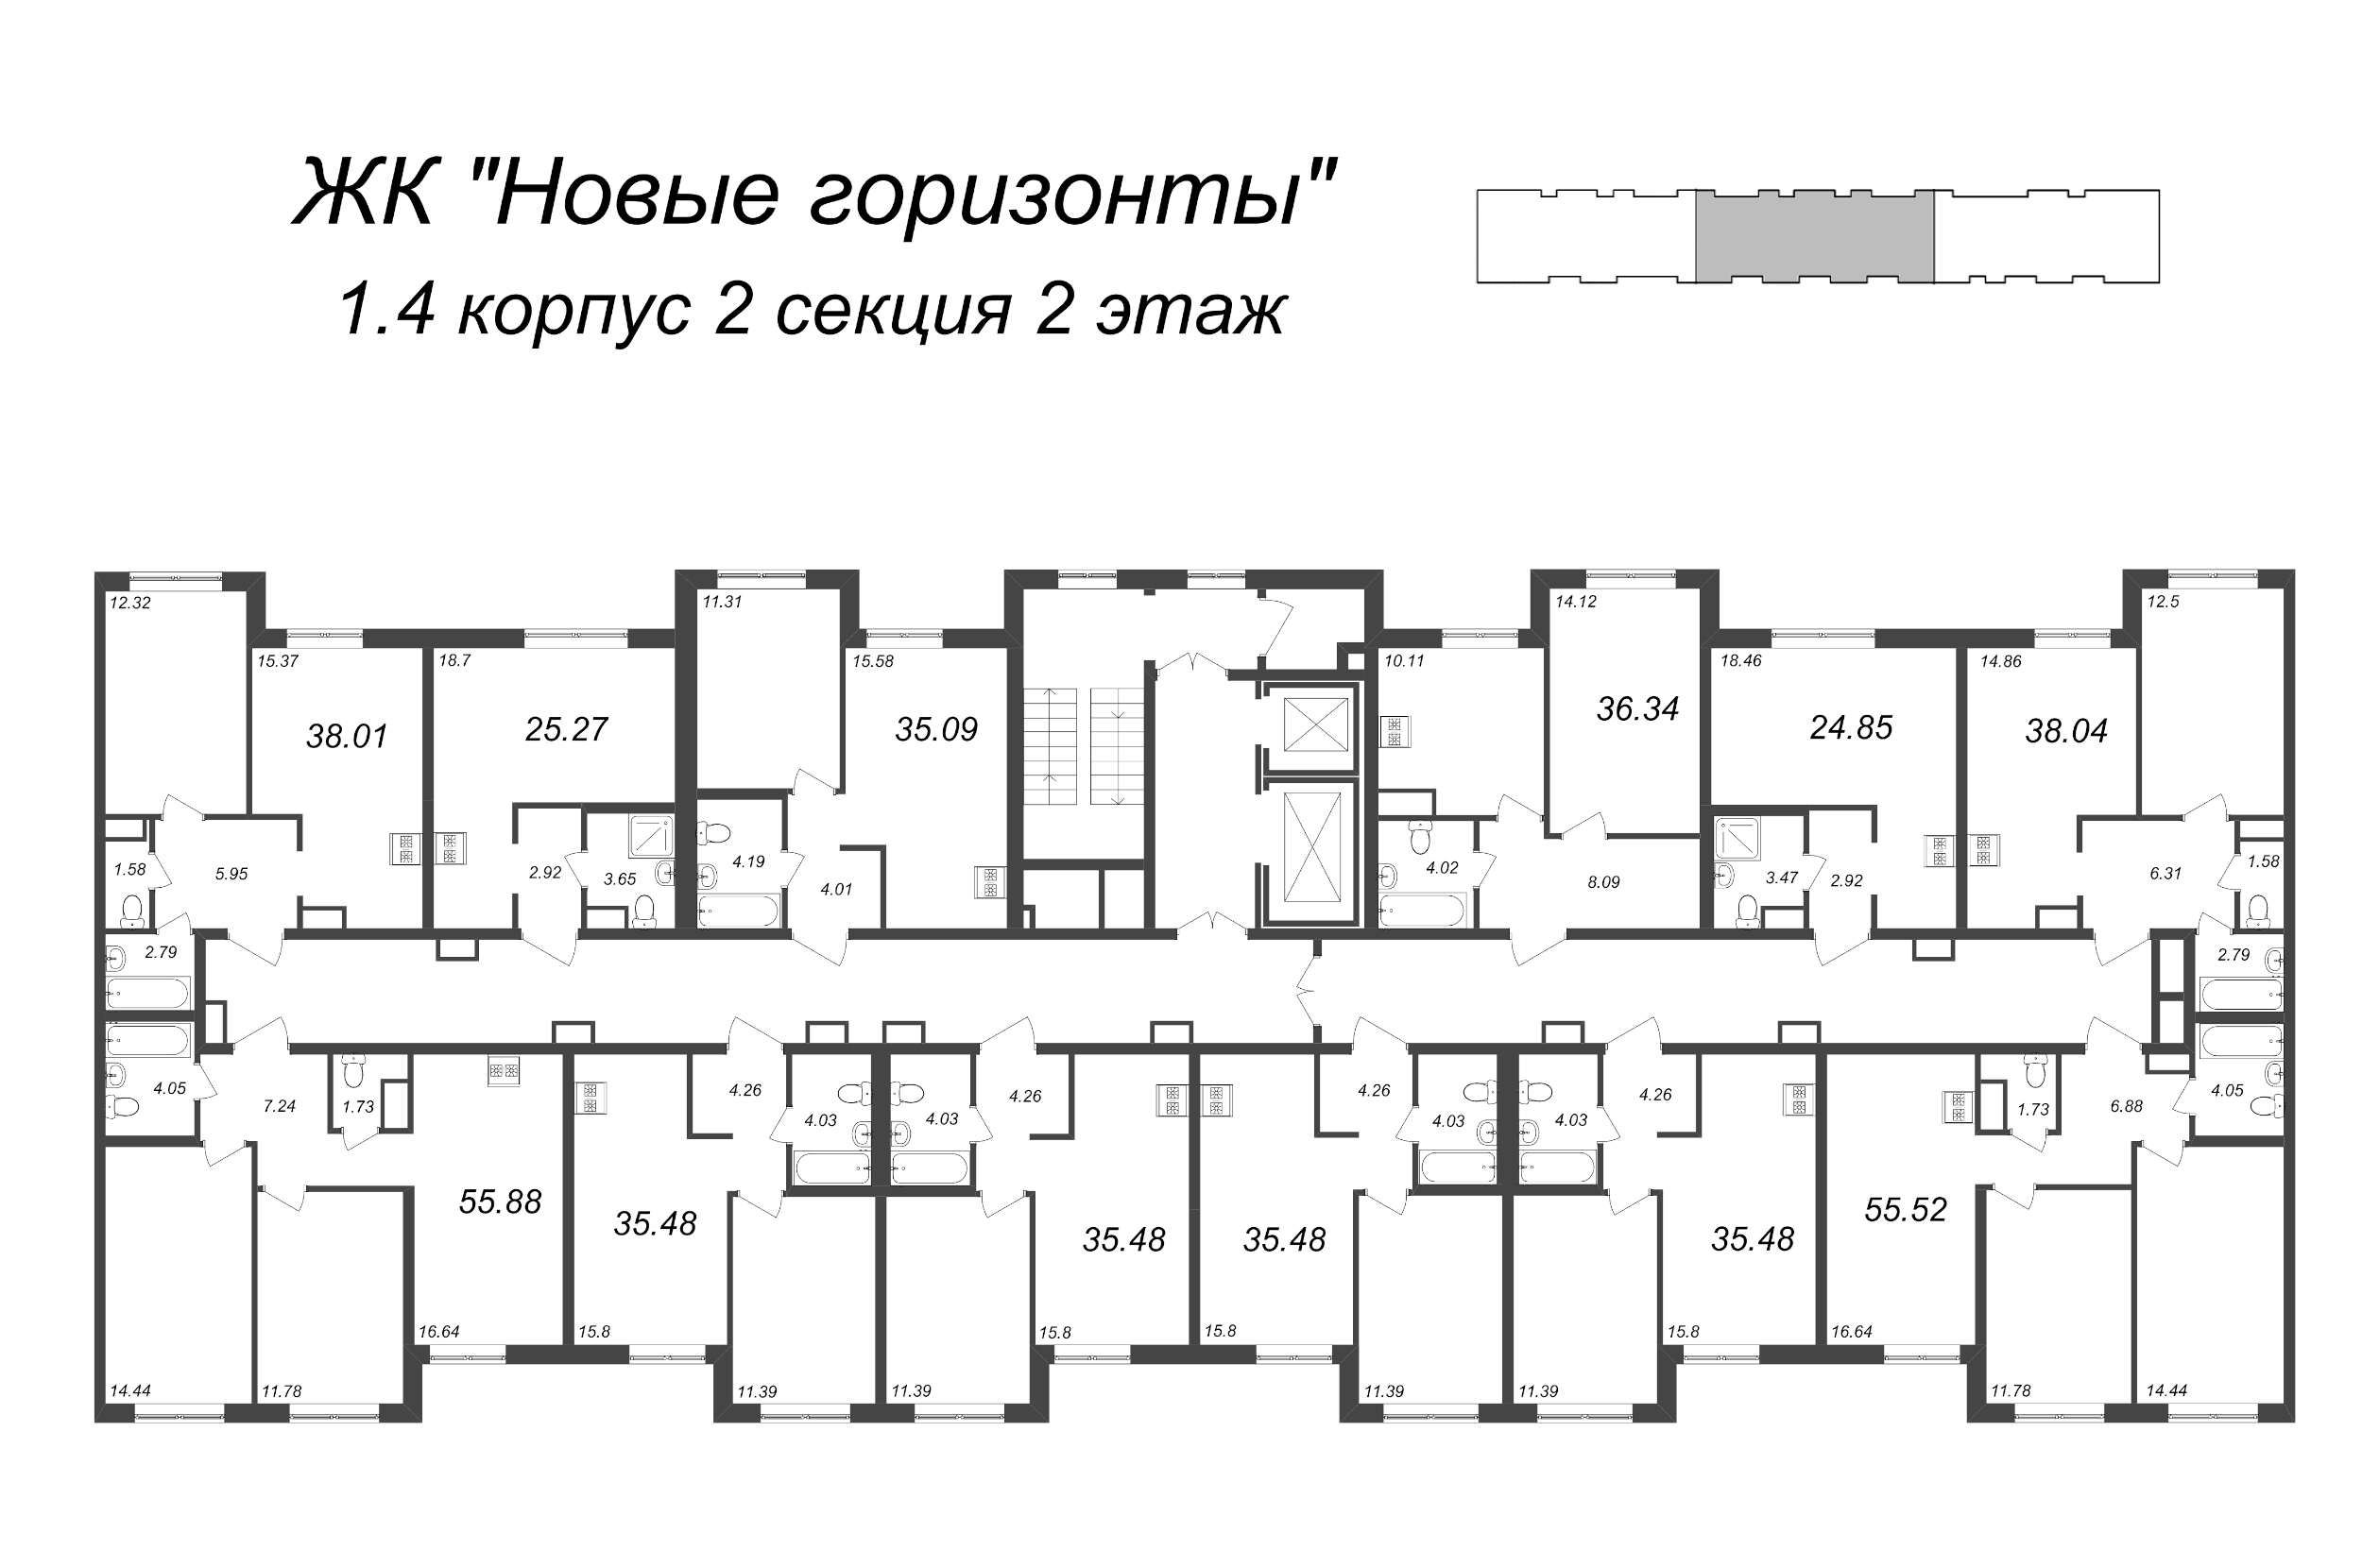 3-комнатная (Евро) квартира, 55.52 м² - планировка этажа